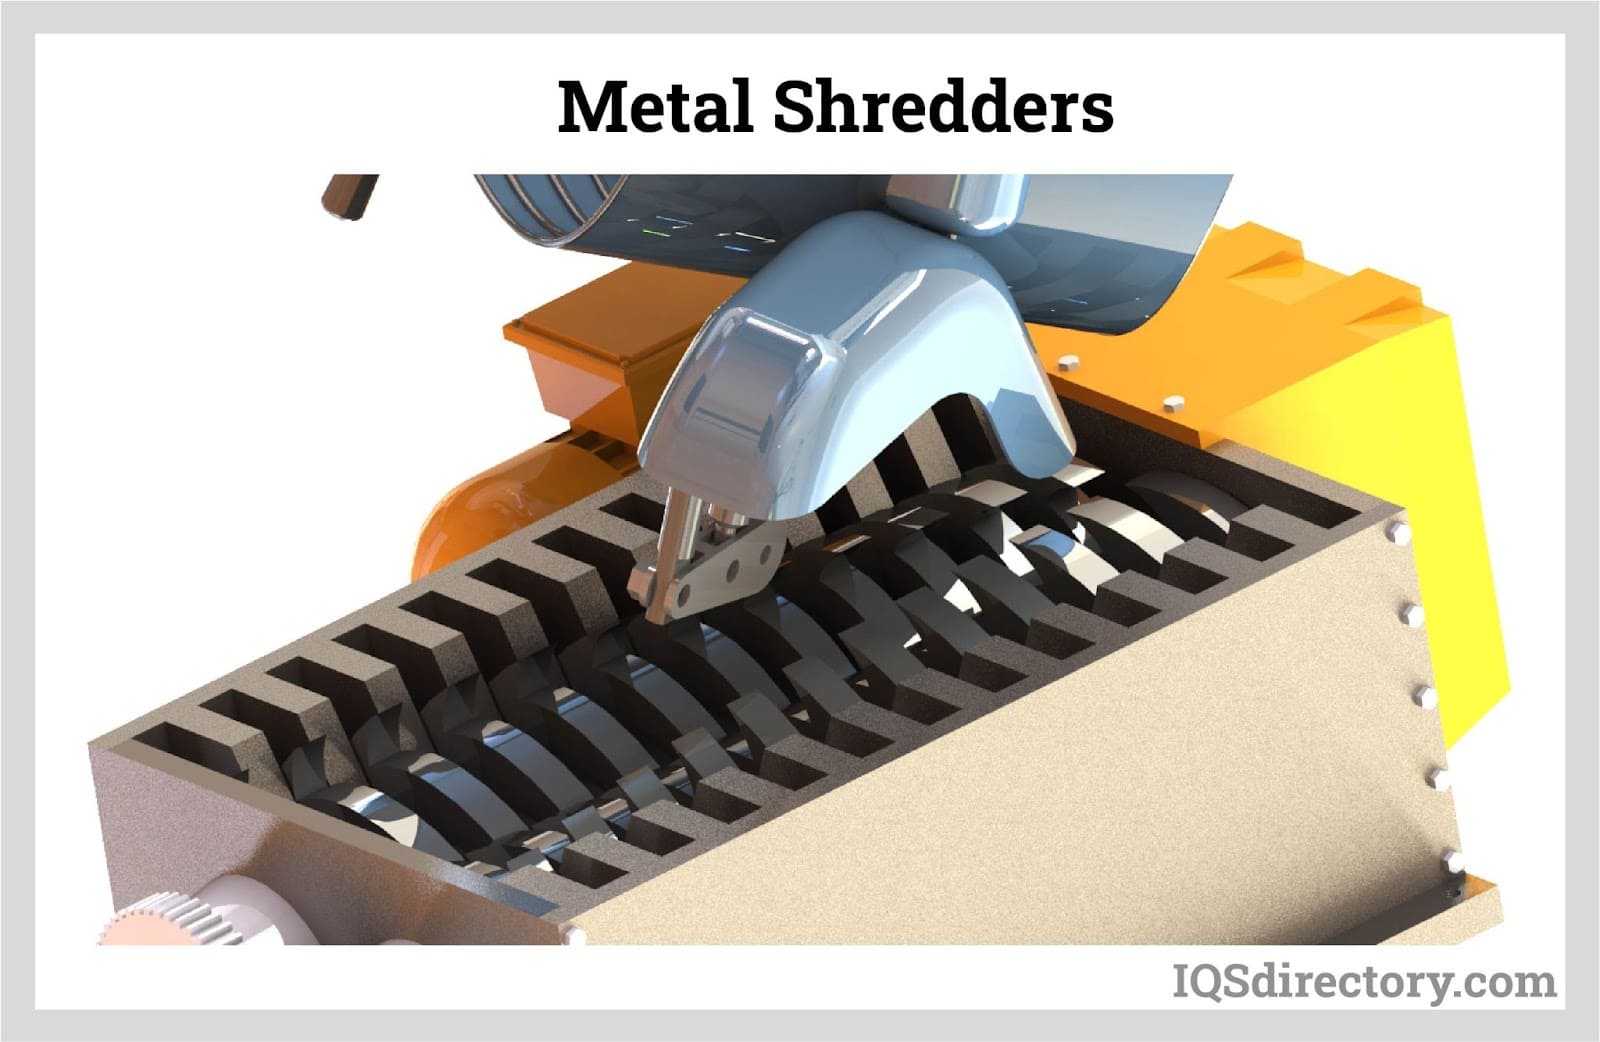 https://www.iqsdirectory.com/articles/shredder/metal-shredders/metal-shredders.jpg